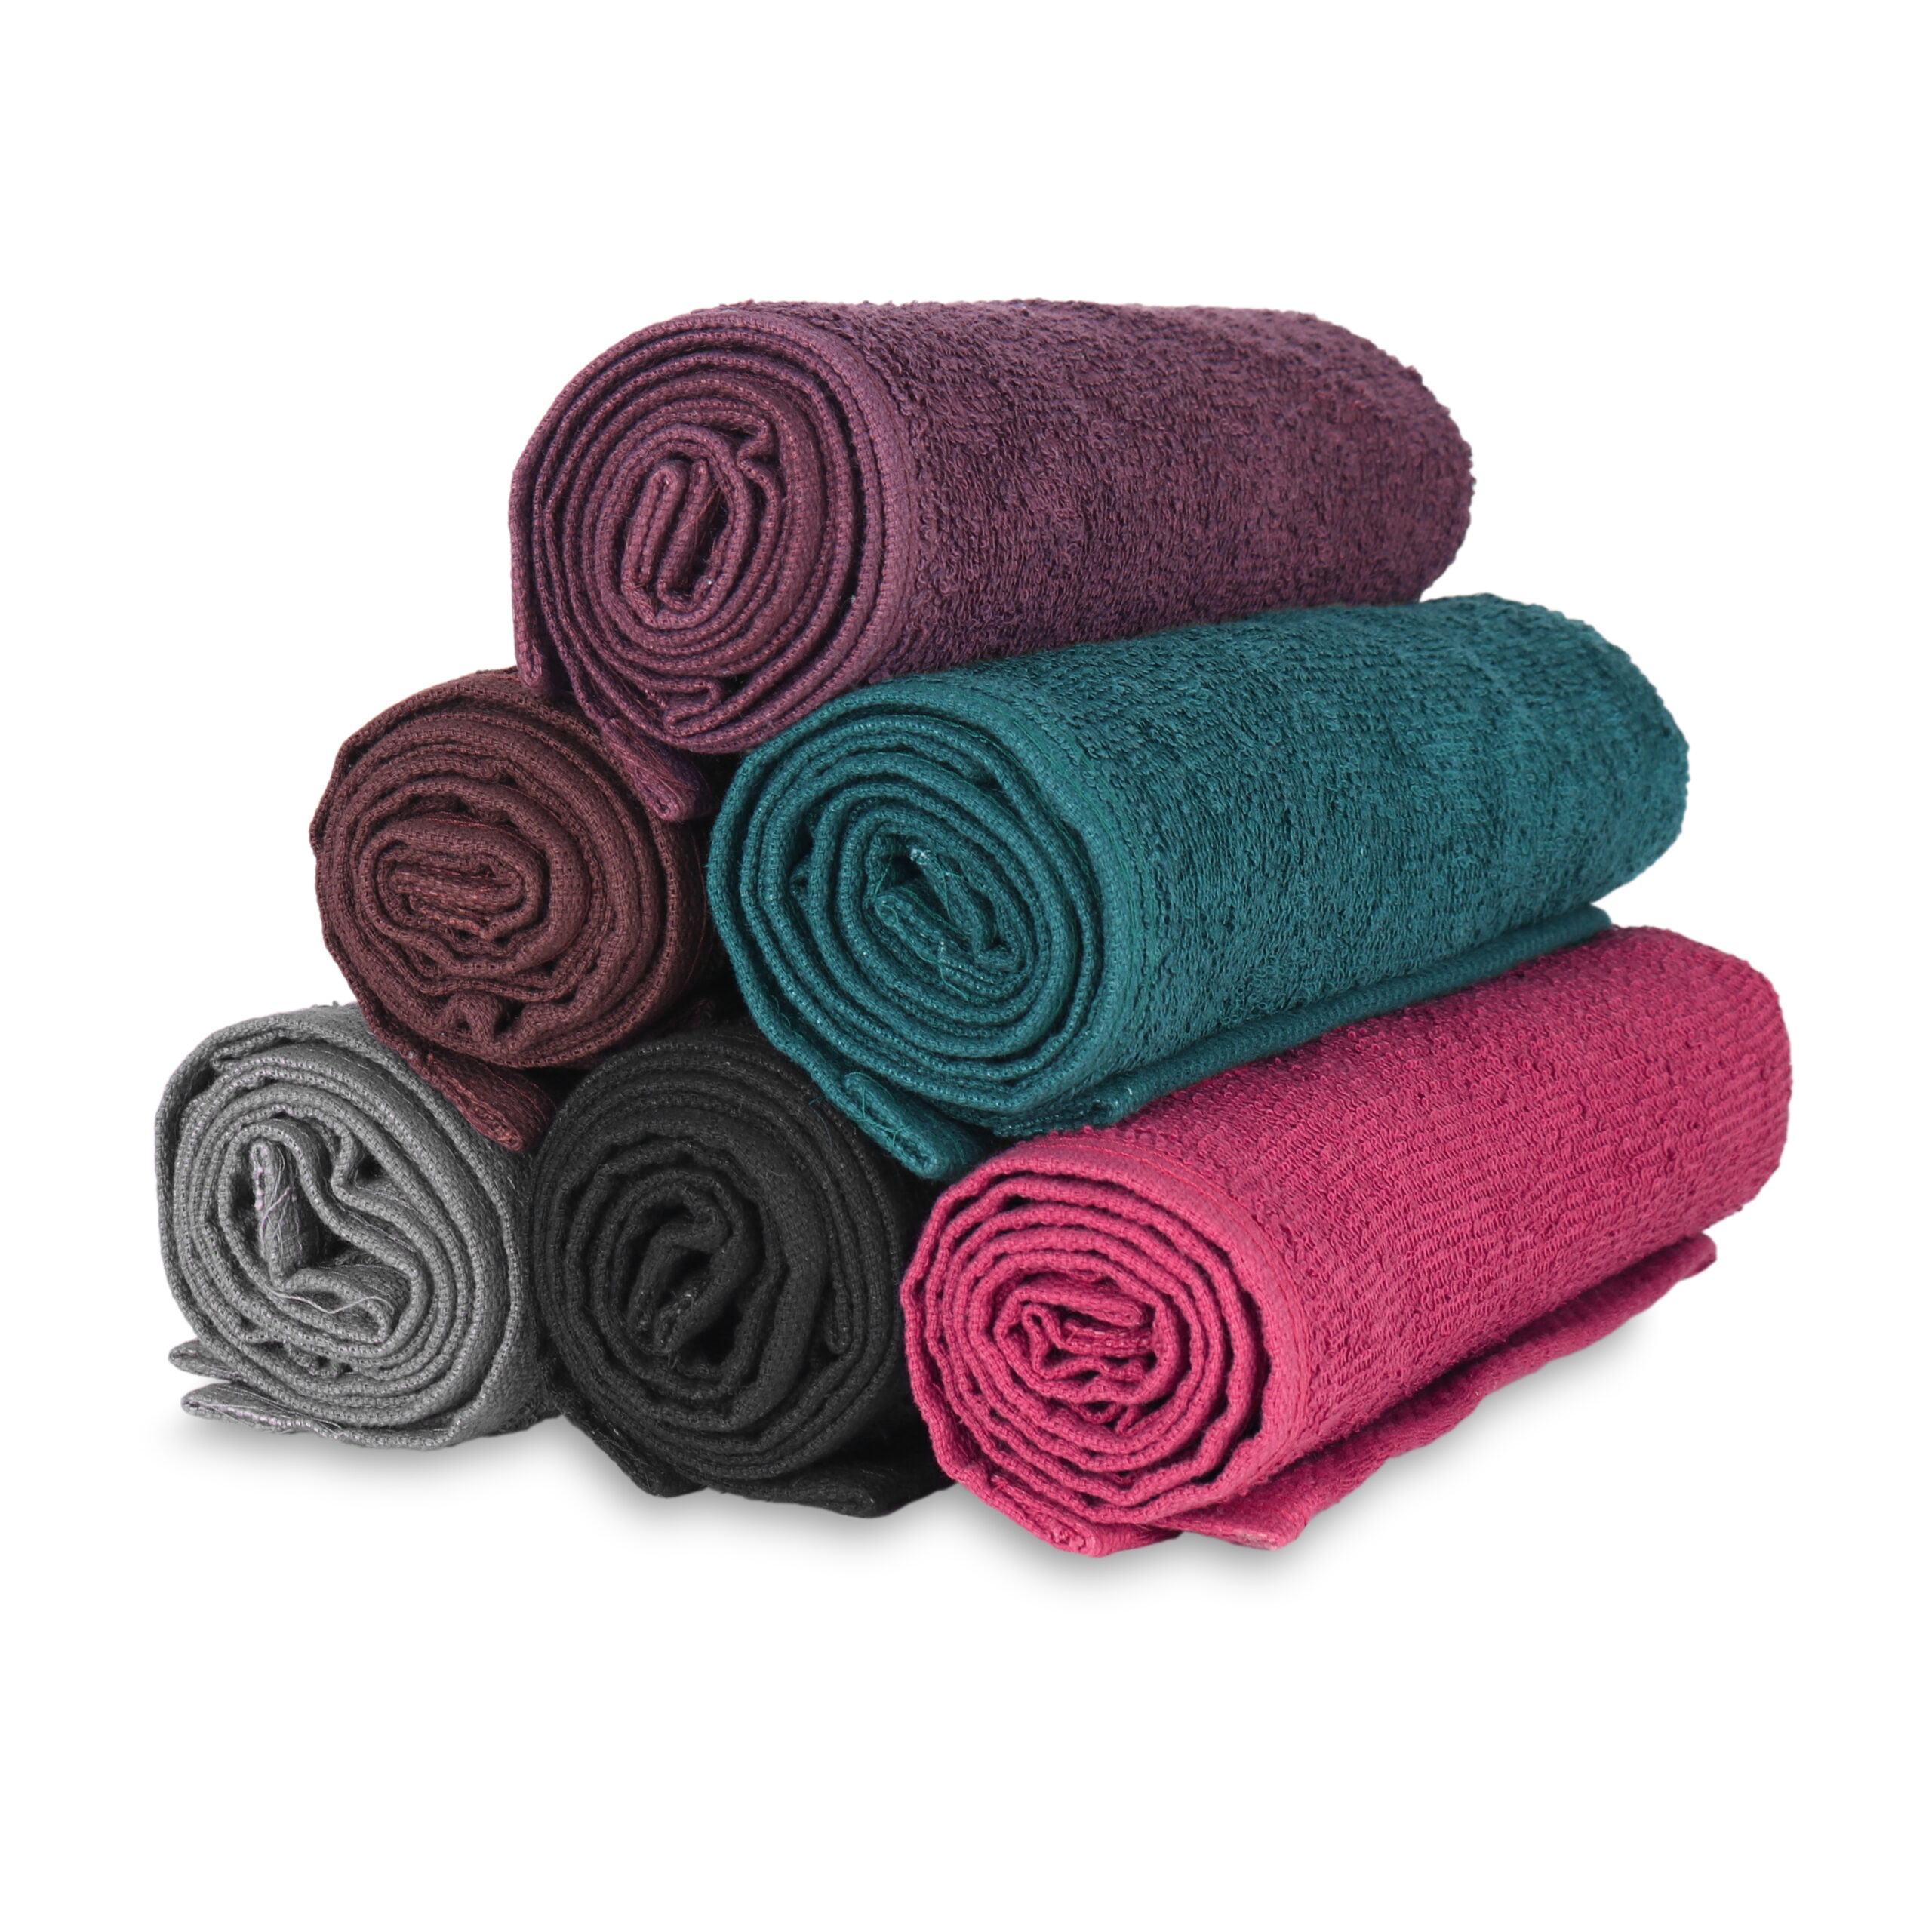 Kitchen Towel/Bar Mops 15x18 -Versatile Cleaning Essential